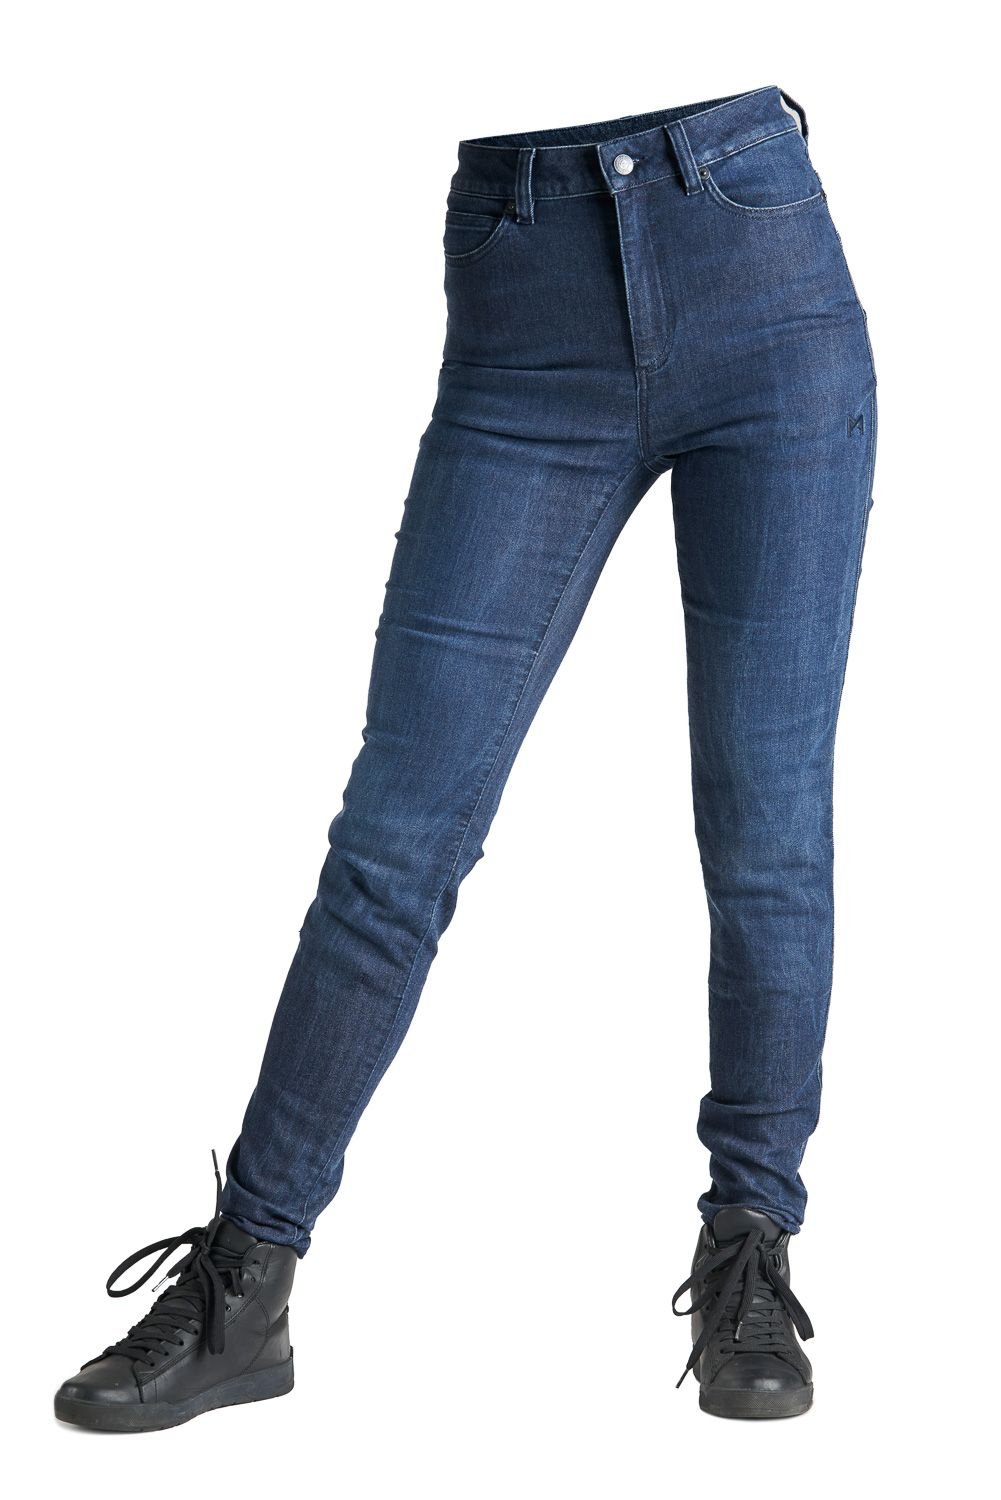 Image of Pando Moto Kusari Cor 02 Women Motorcycle Jeans Skinny-Fit Cordura Talla W26/L32